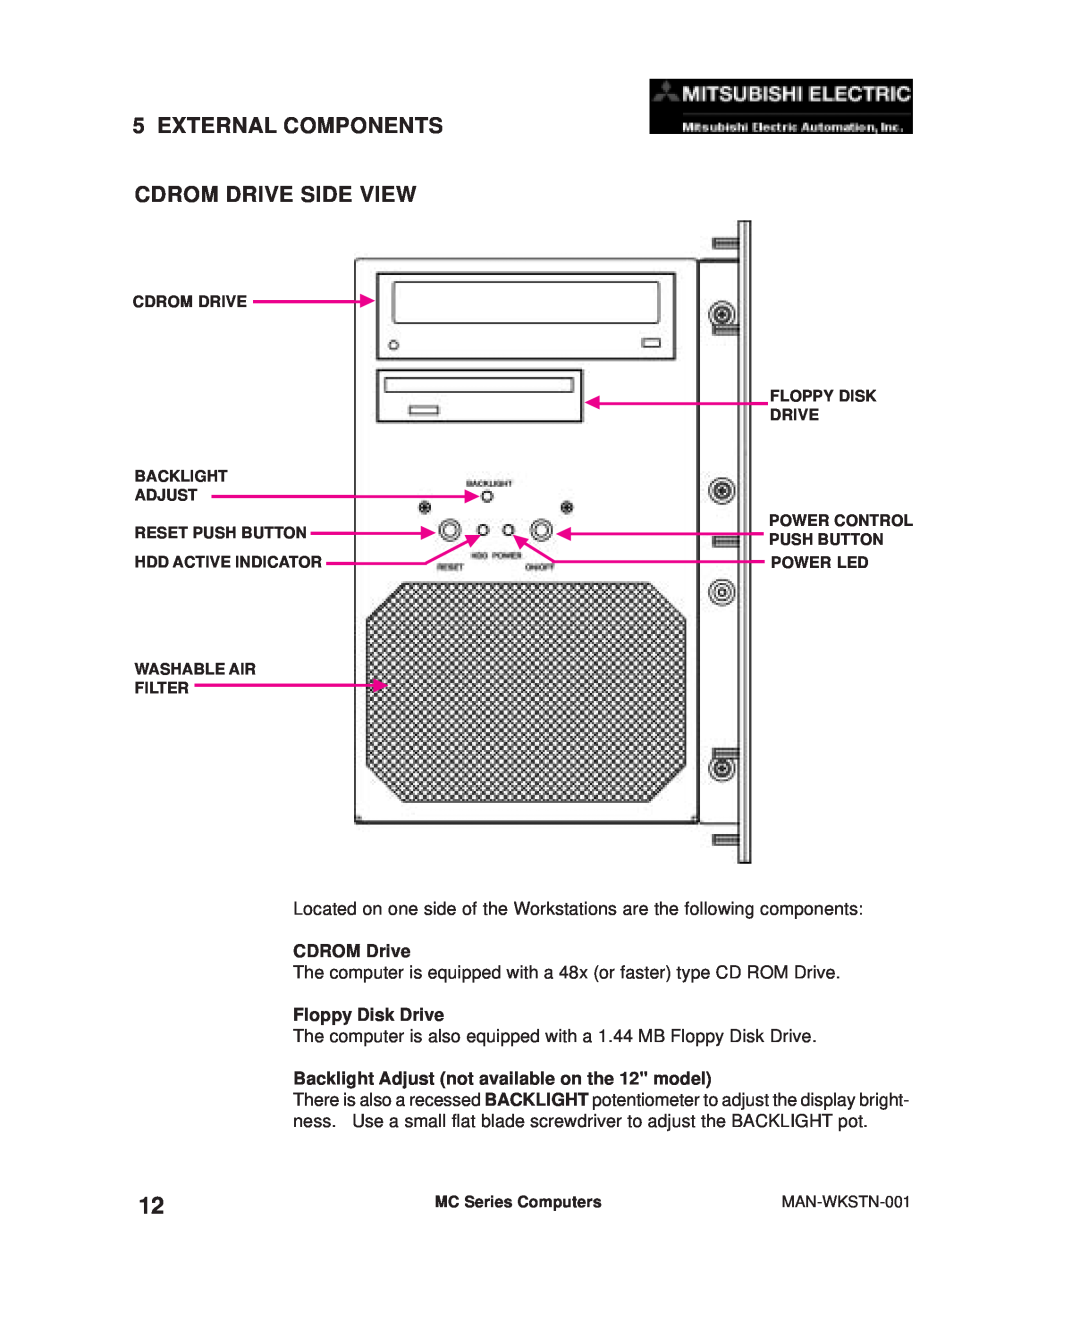 Mitsubishi Electronics MC300 manual External Components Cdrom Drive Side View, CDROM Drive, Floppy Disk Drive 